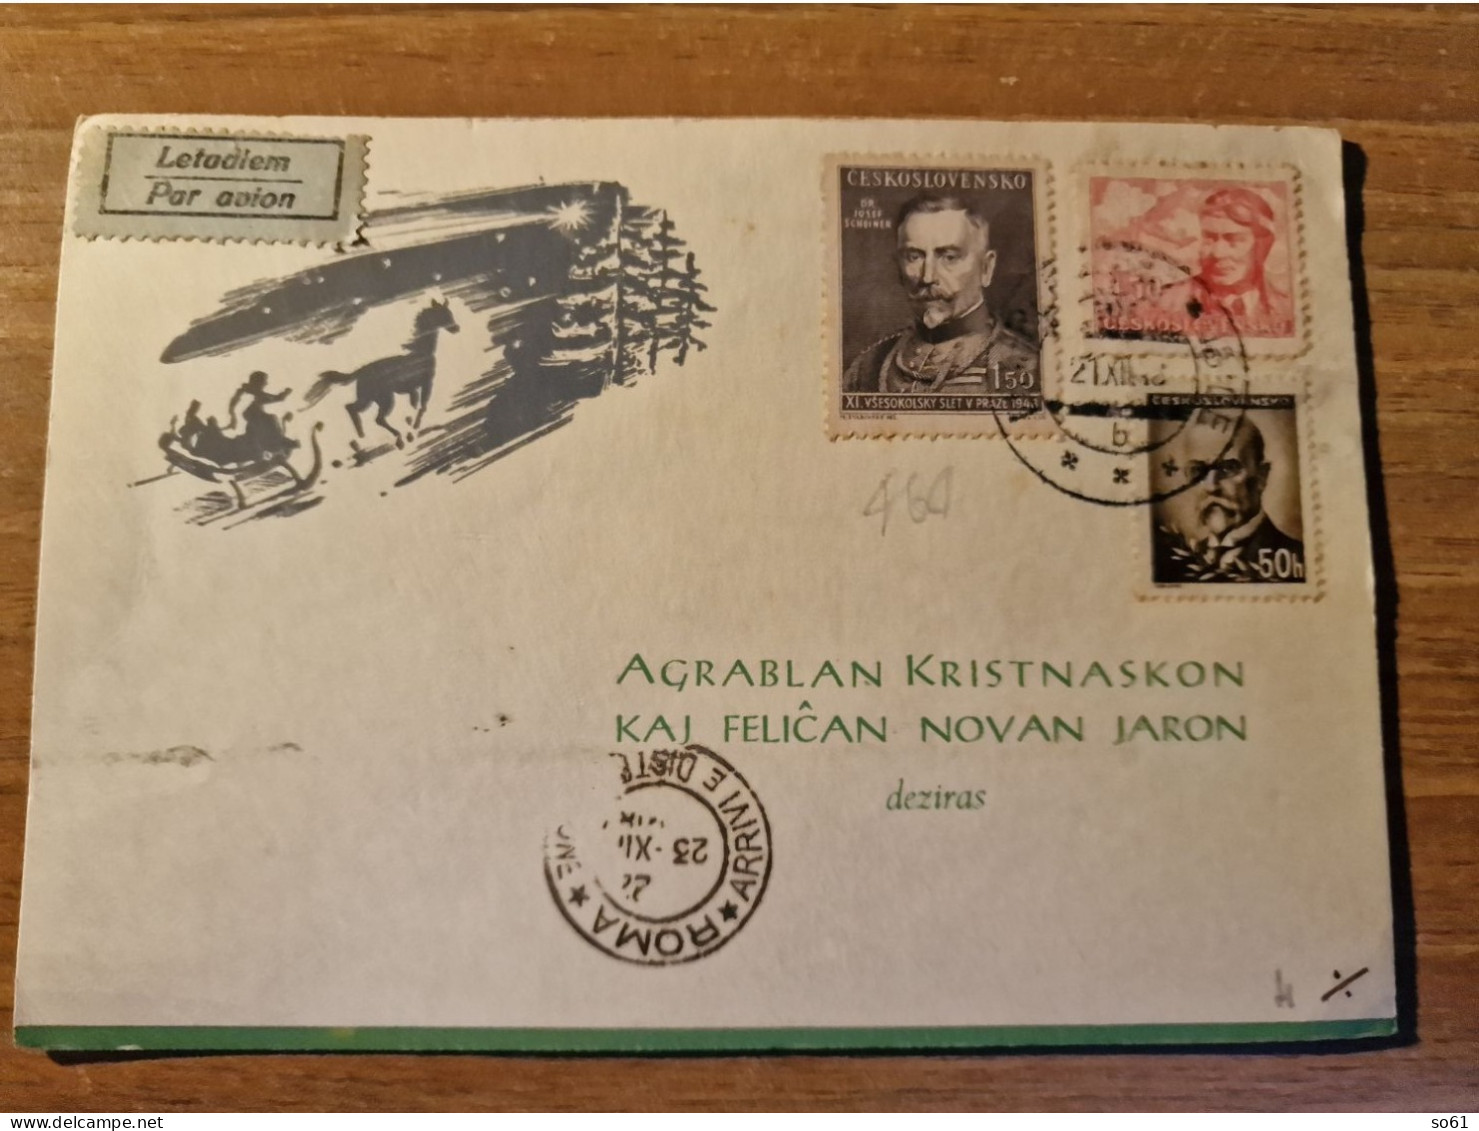 18872.    Cartolina Postale Letadlem  Par Avion Ceskoslovensko Francobolli 1948 - Covers & Documents